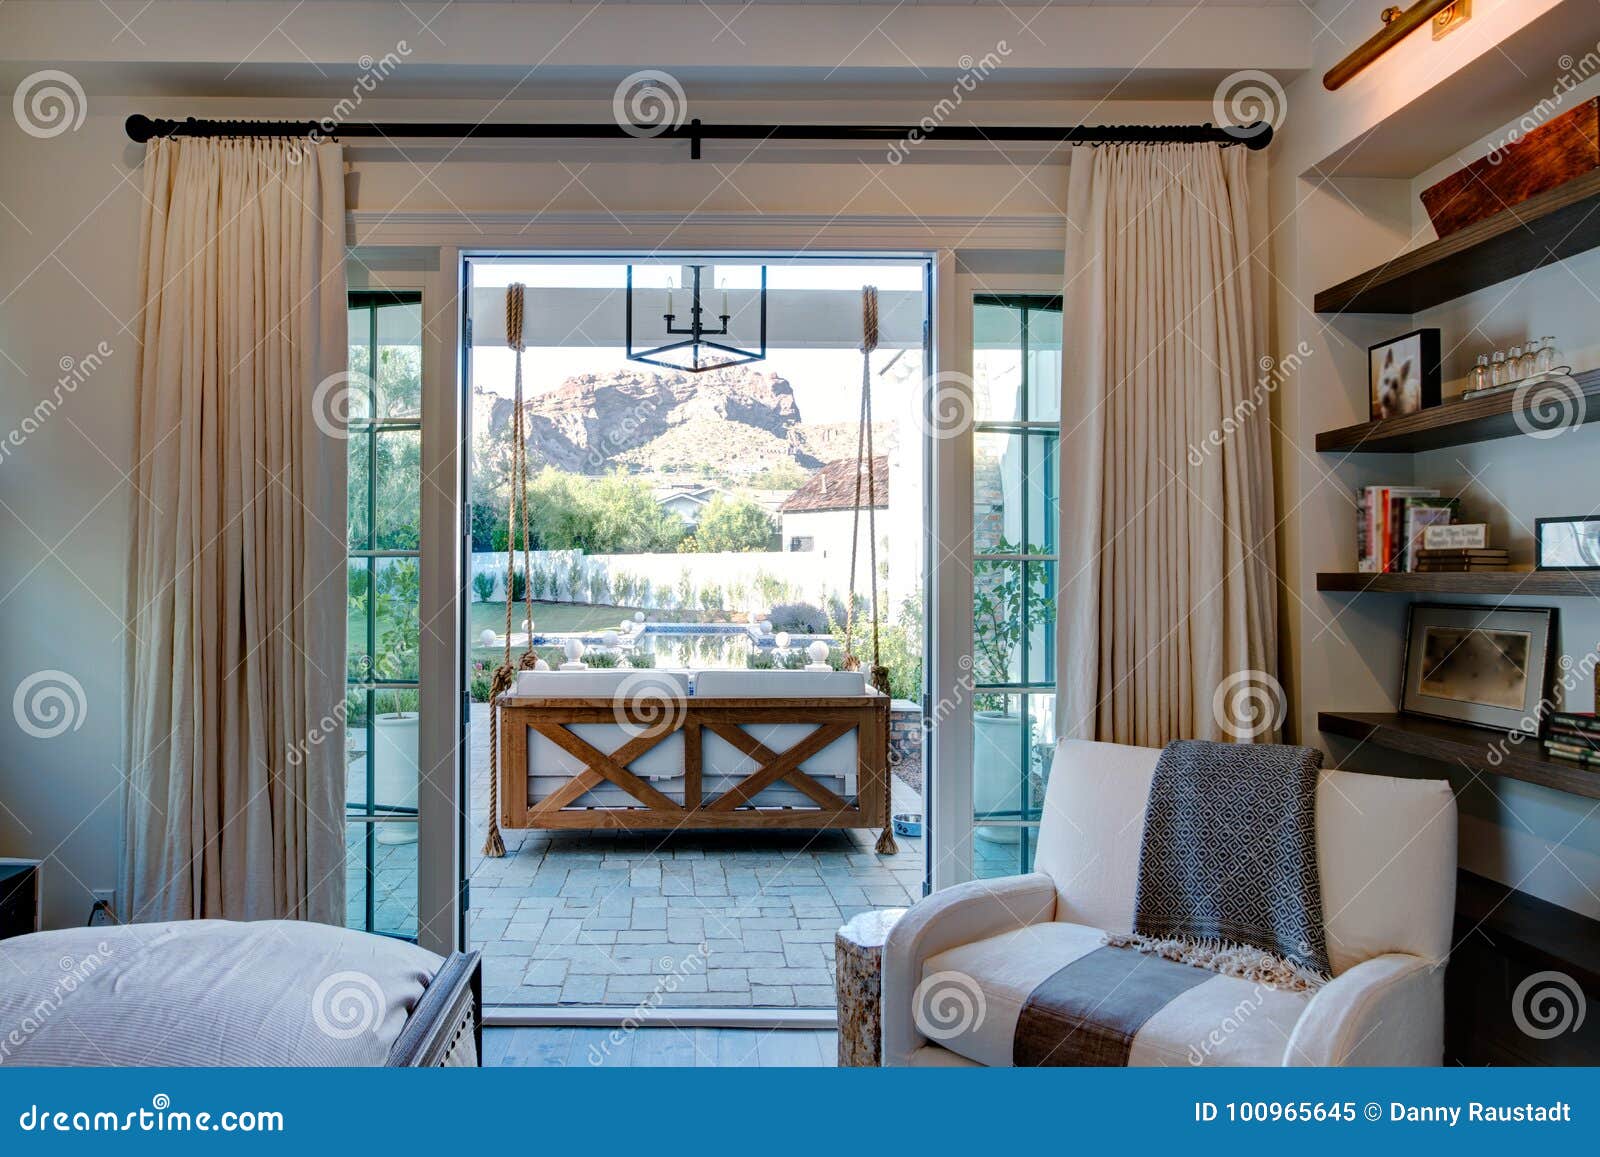 mansion home patio bedroom suite